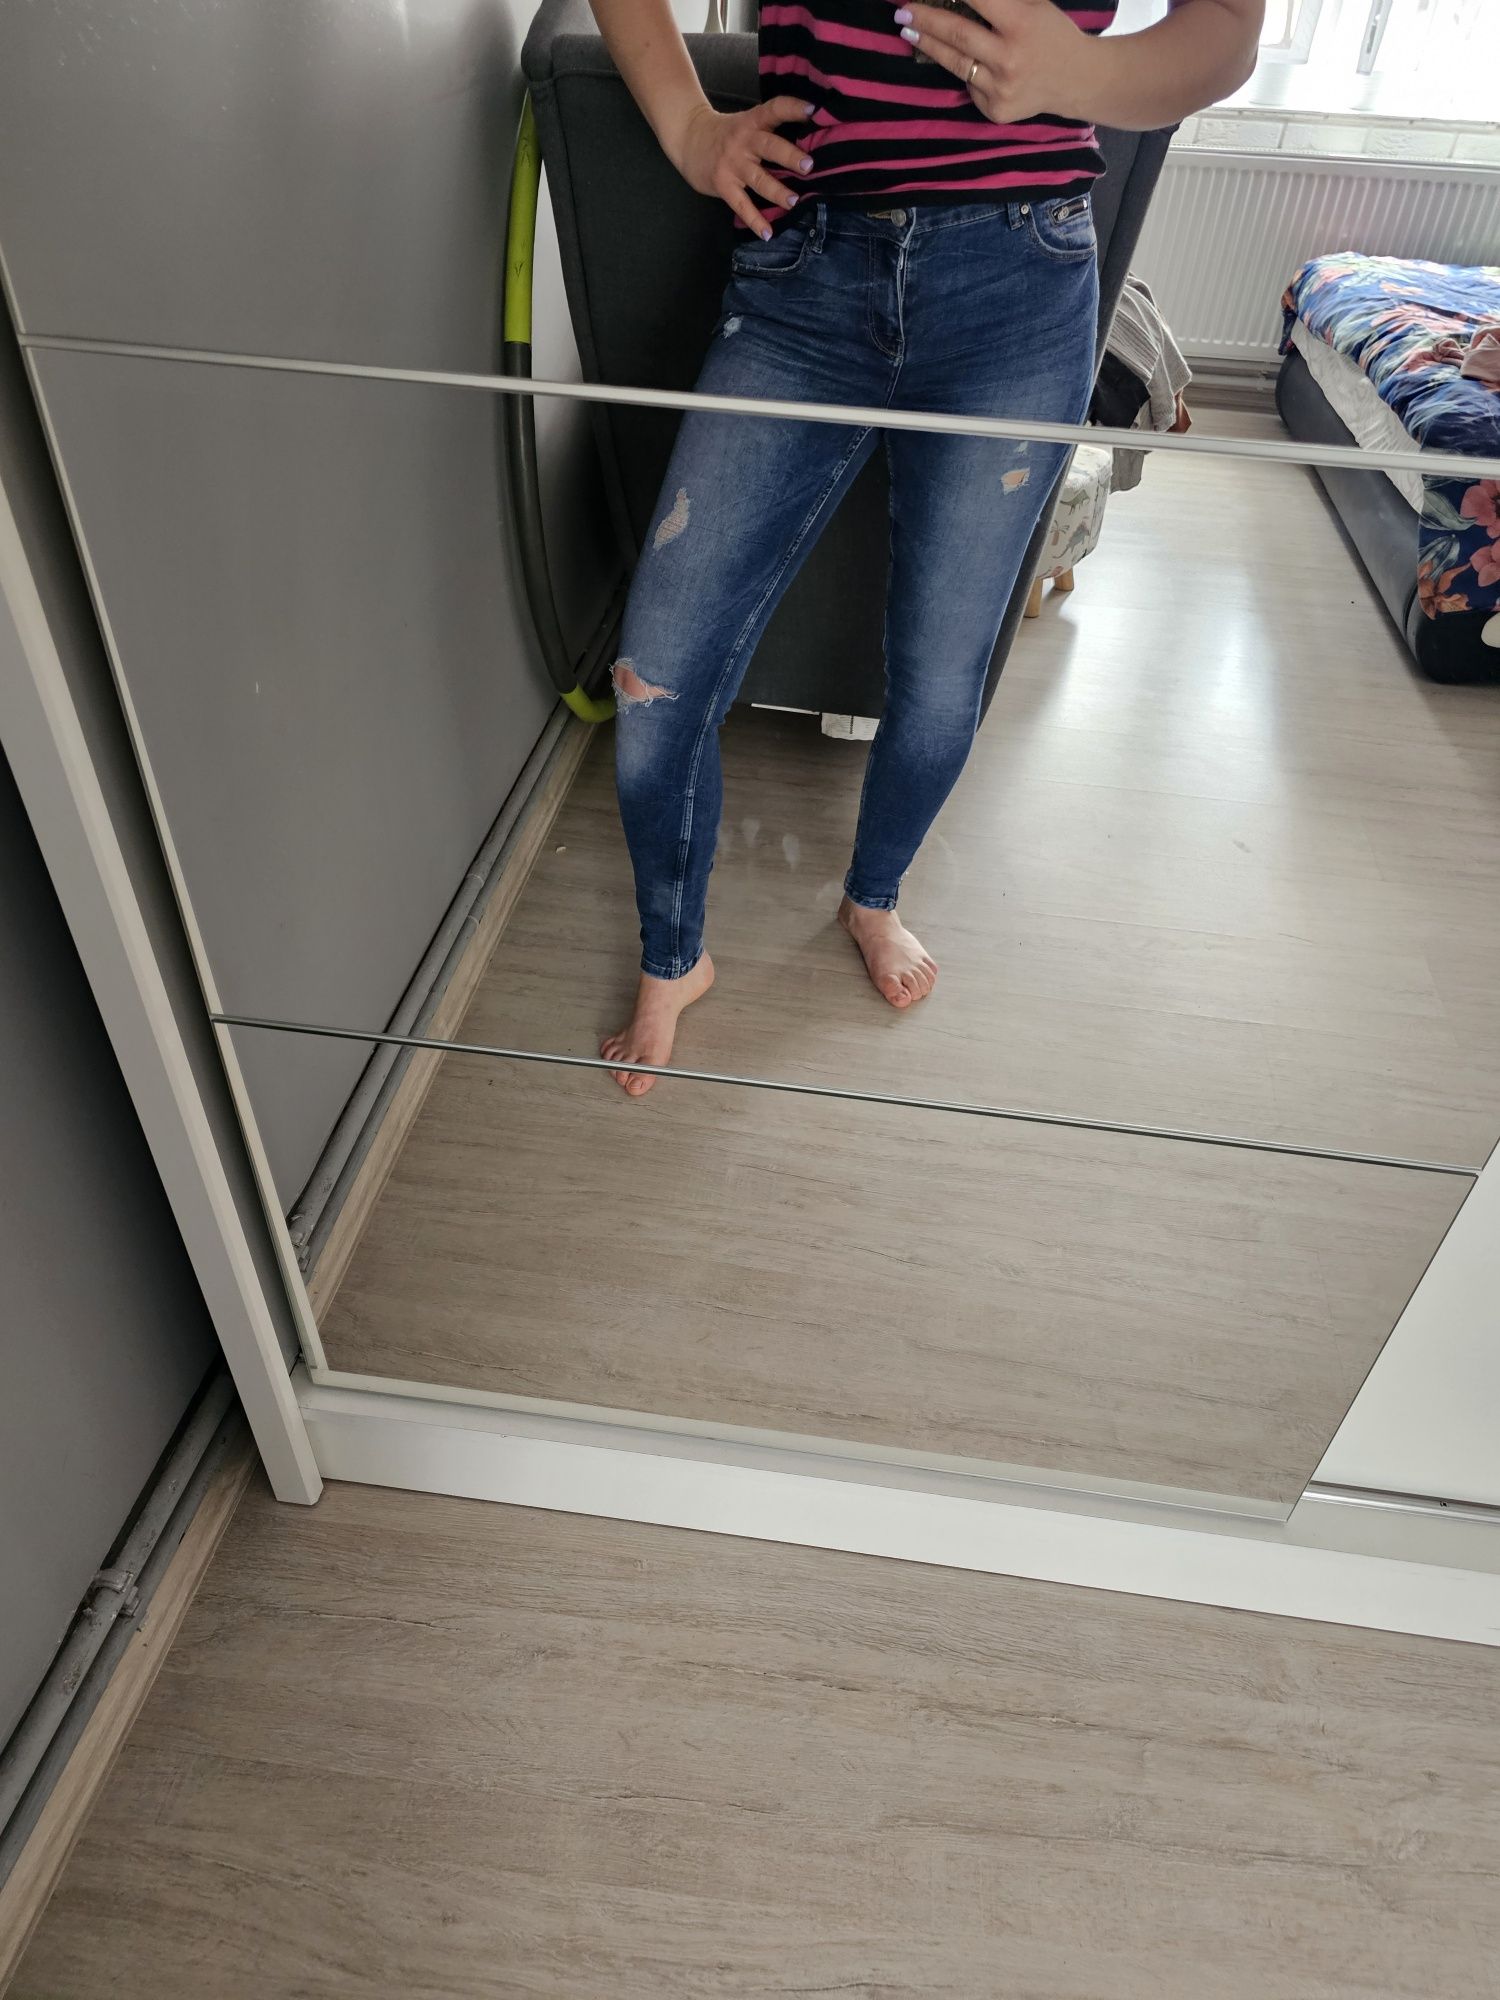 Spodnie jeans rozmiar 36